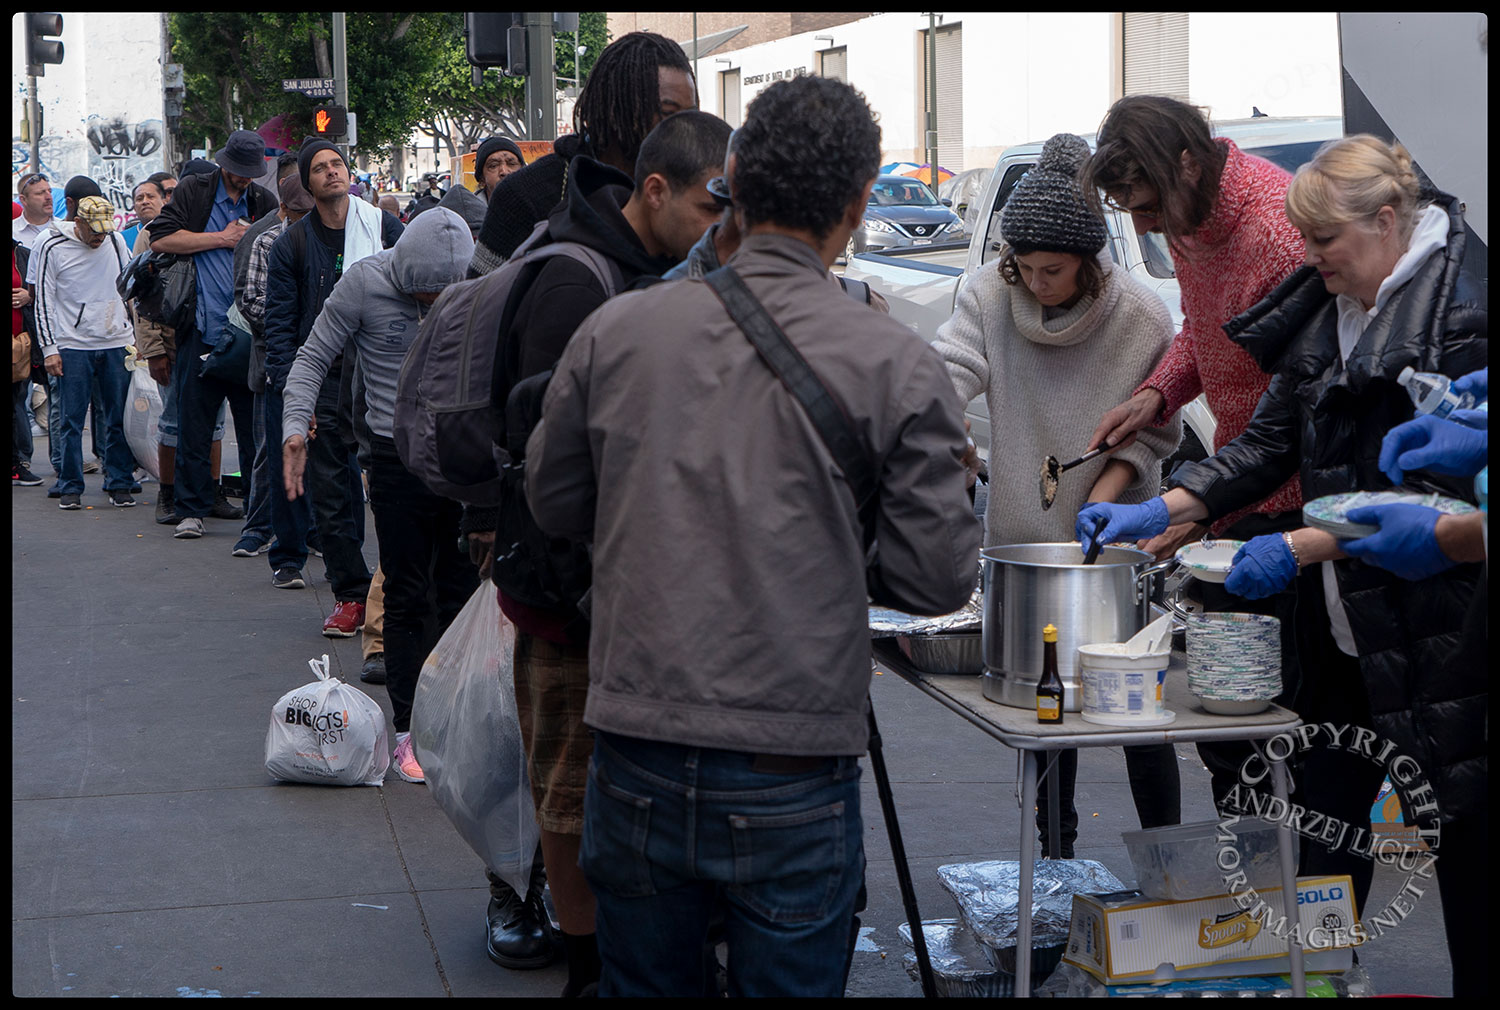 Feeding the homeless, Skid Row, LA, Christmas Day 2018